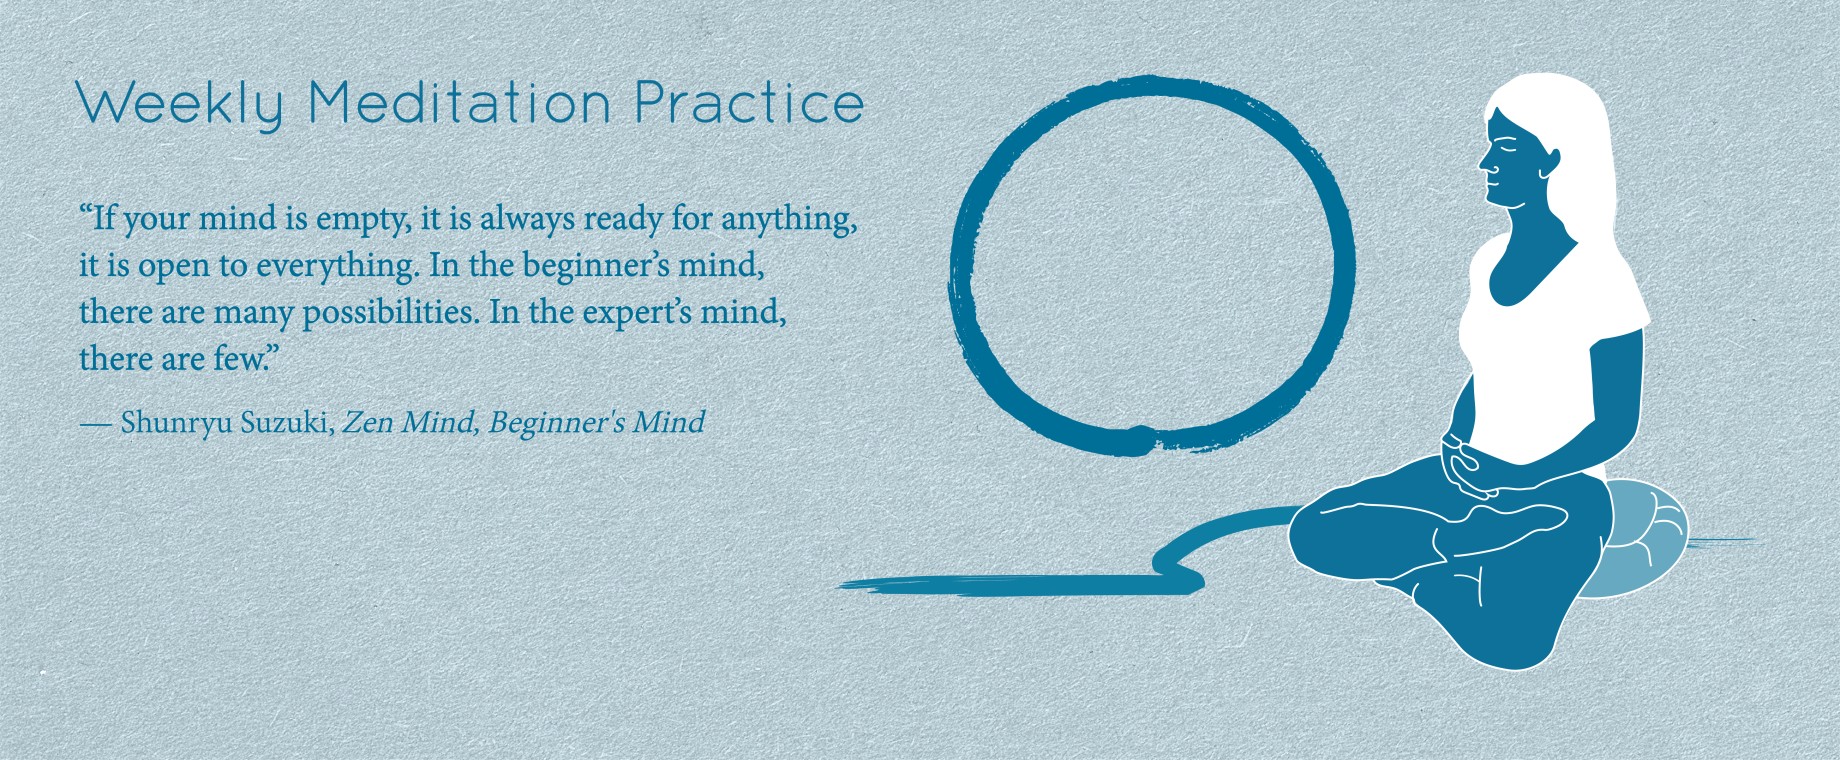 ildc-meditation-practice_slide.jpg